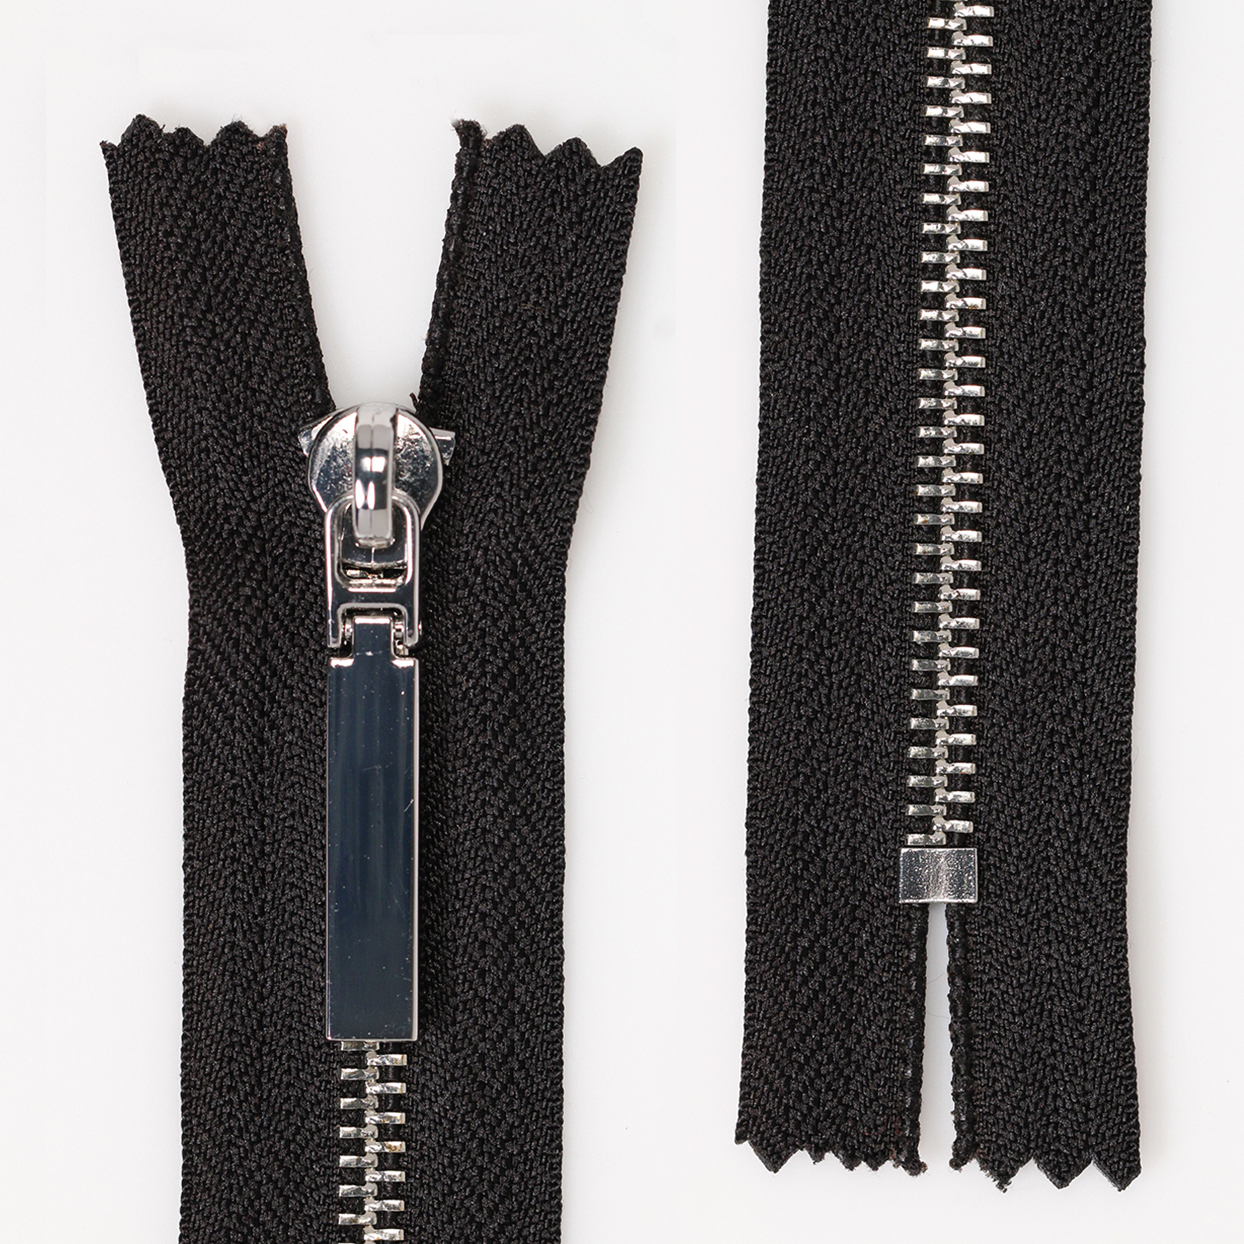 Invisible Zippers - Talon International Inc., Invisible Zipper